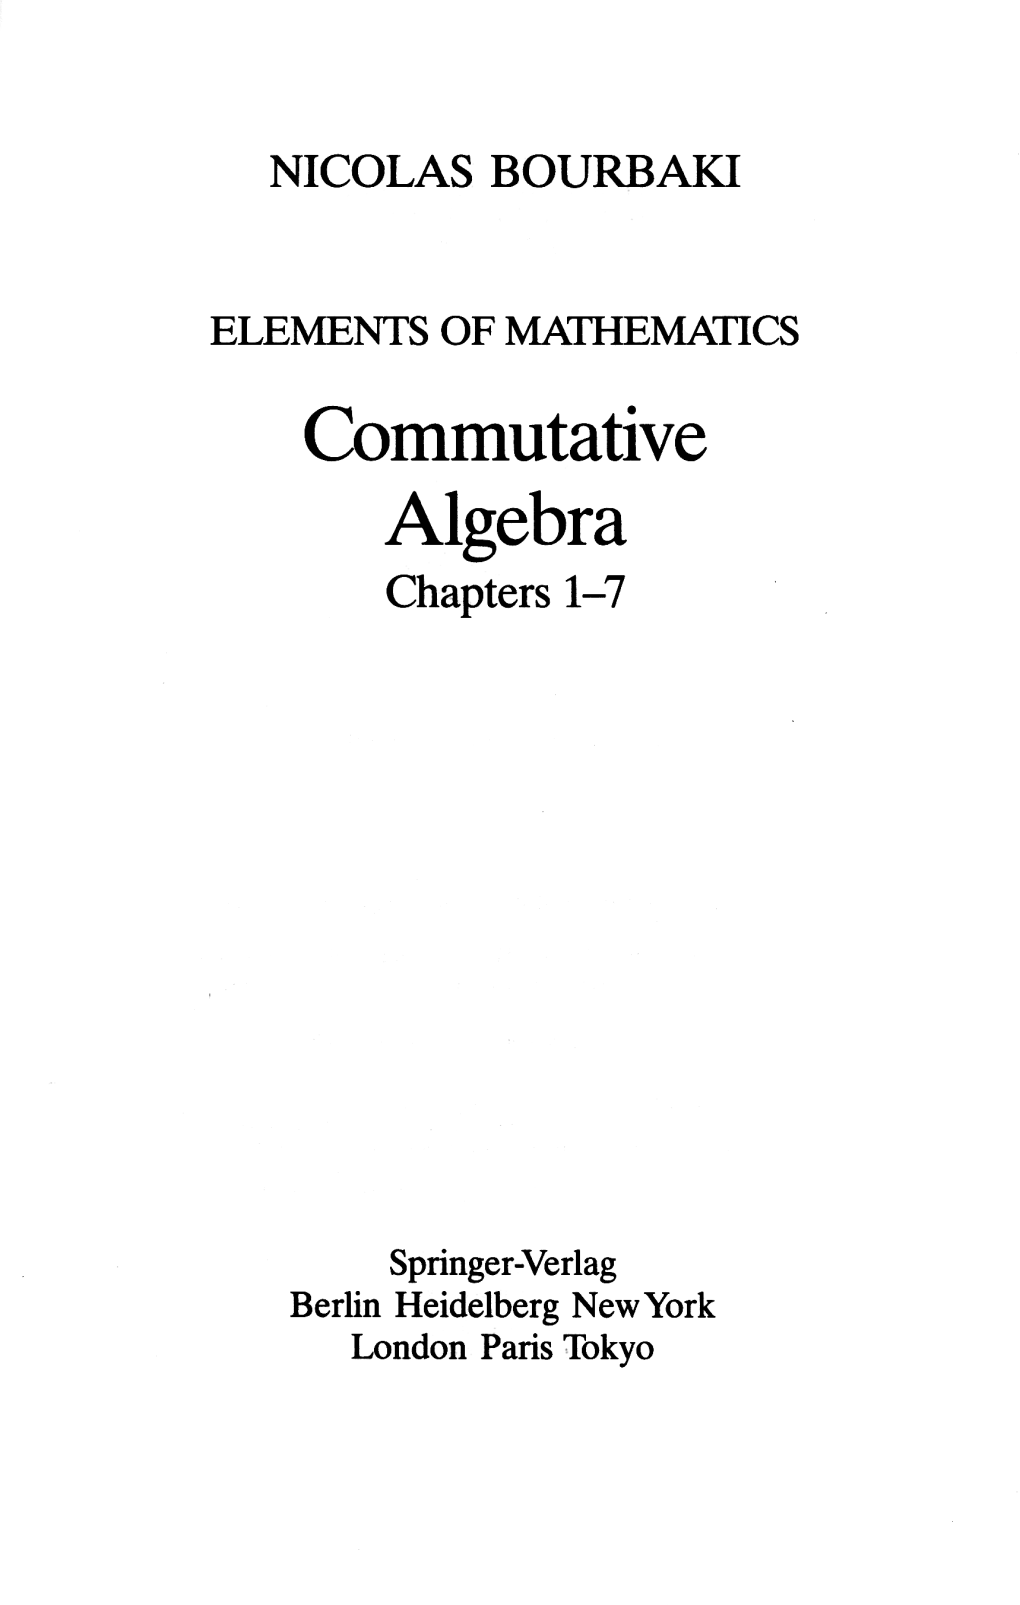 Commutative Algebra Chapters 1-7